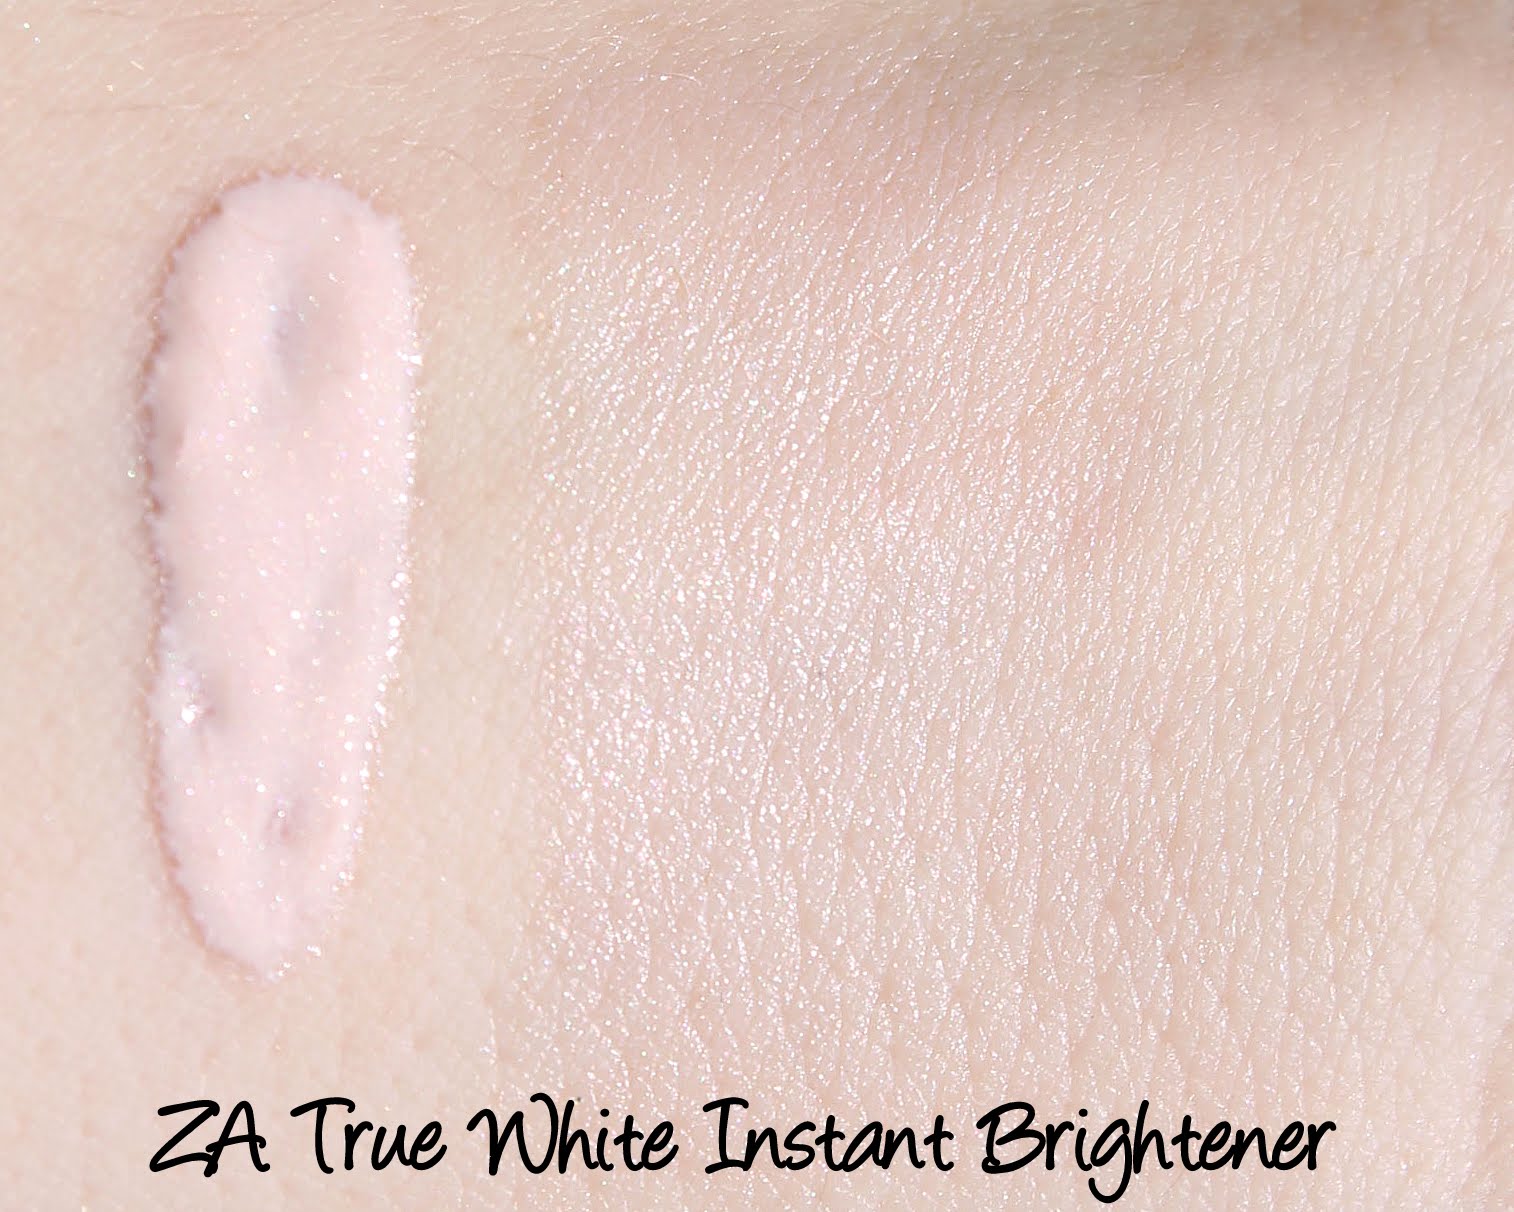 ZA True White Instant Brightener Swatches & Review